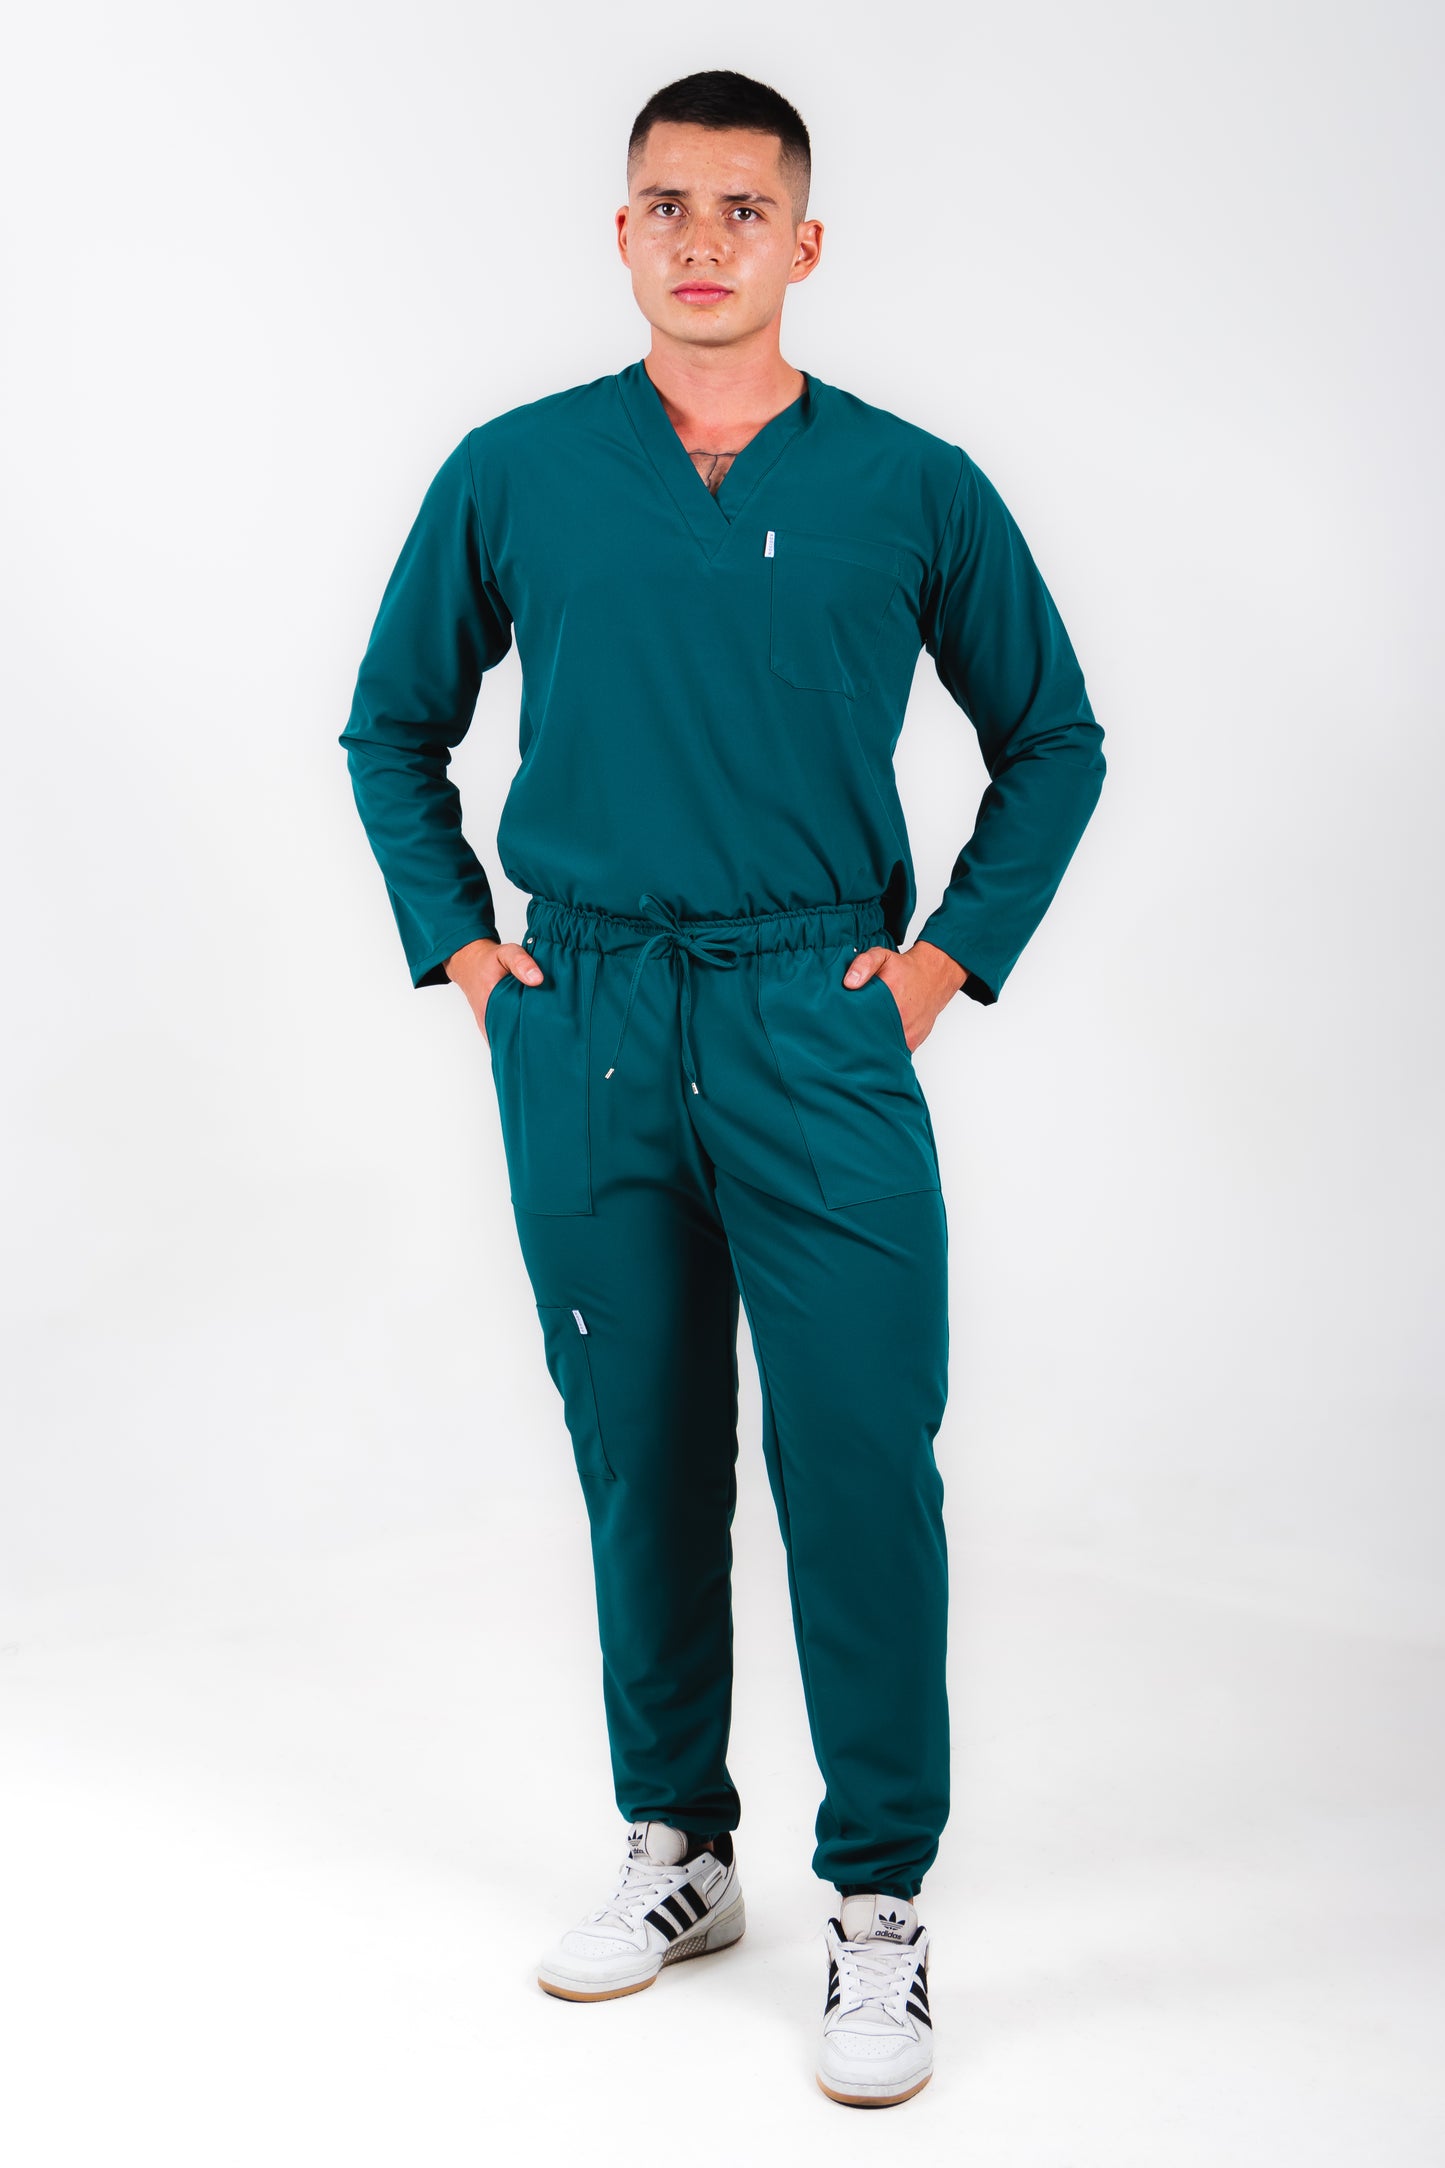 Uniforme quirúrgico para caballero color verde botella, manga larga corte jogger. modelo winter marca addisonscrubs.